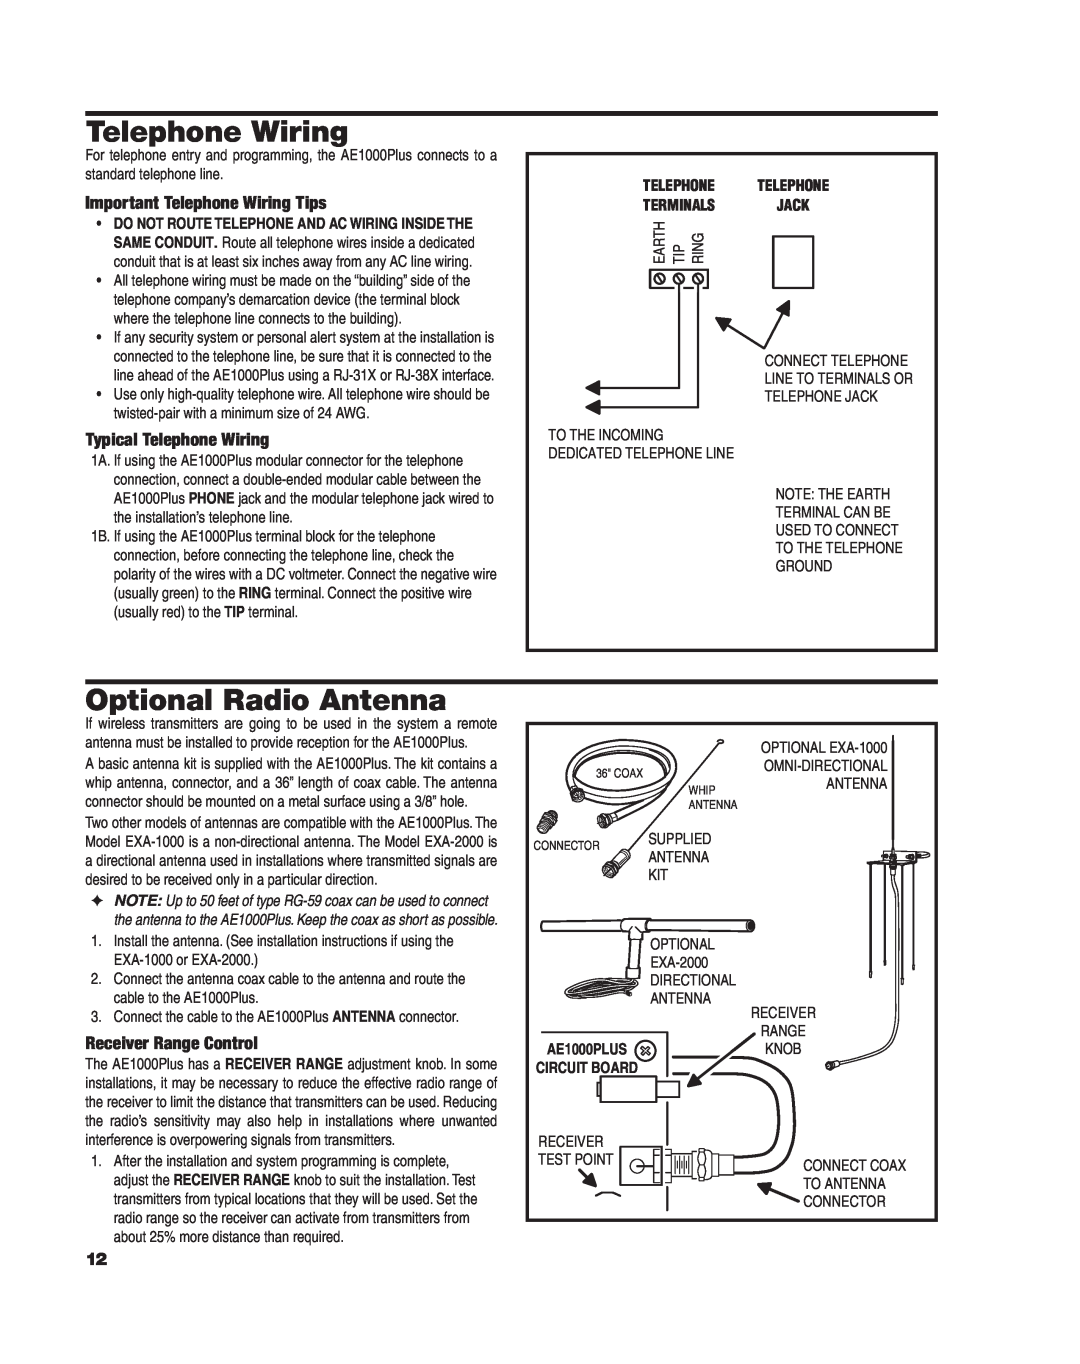 Linear AE1000Plus Optional Radio Antenna, Important Telephone Wiring Tips, Typical Telephone Wiring, Telephone Jack 